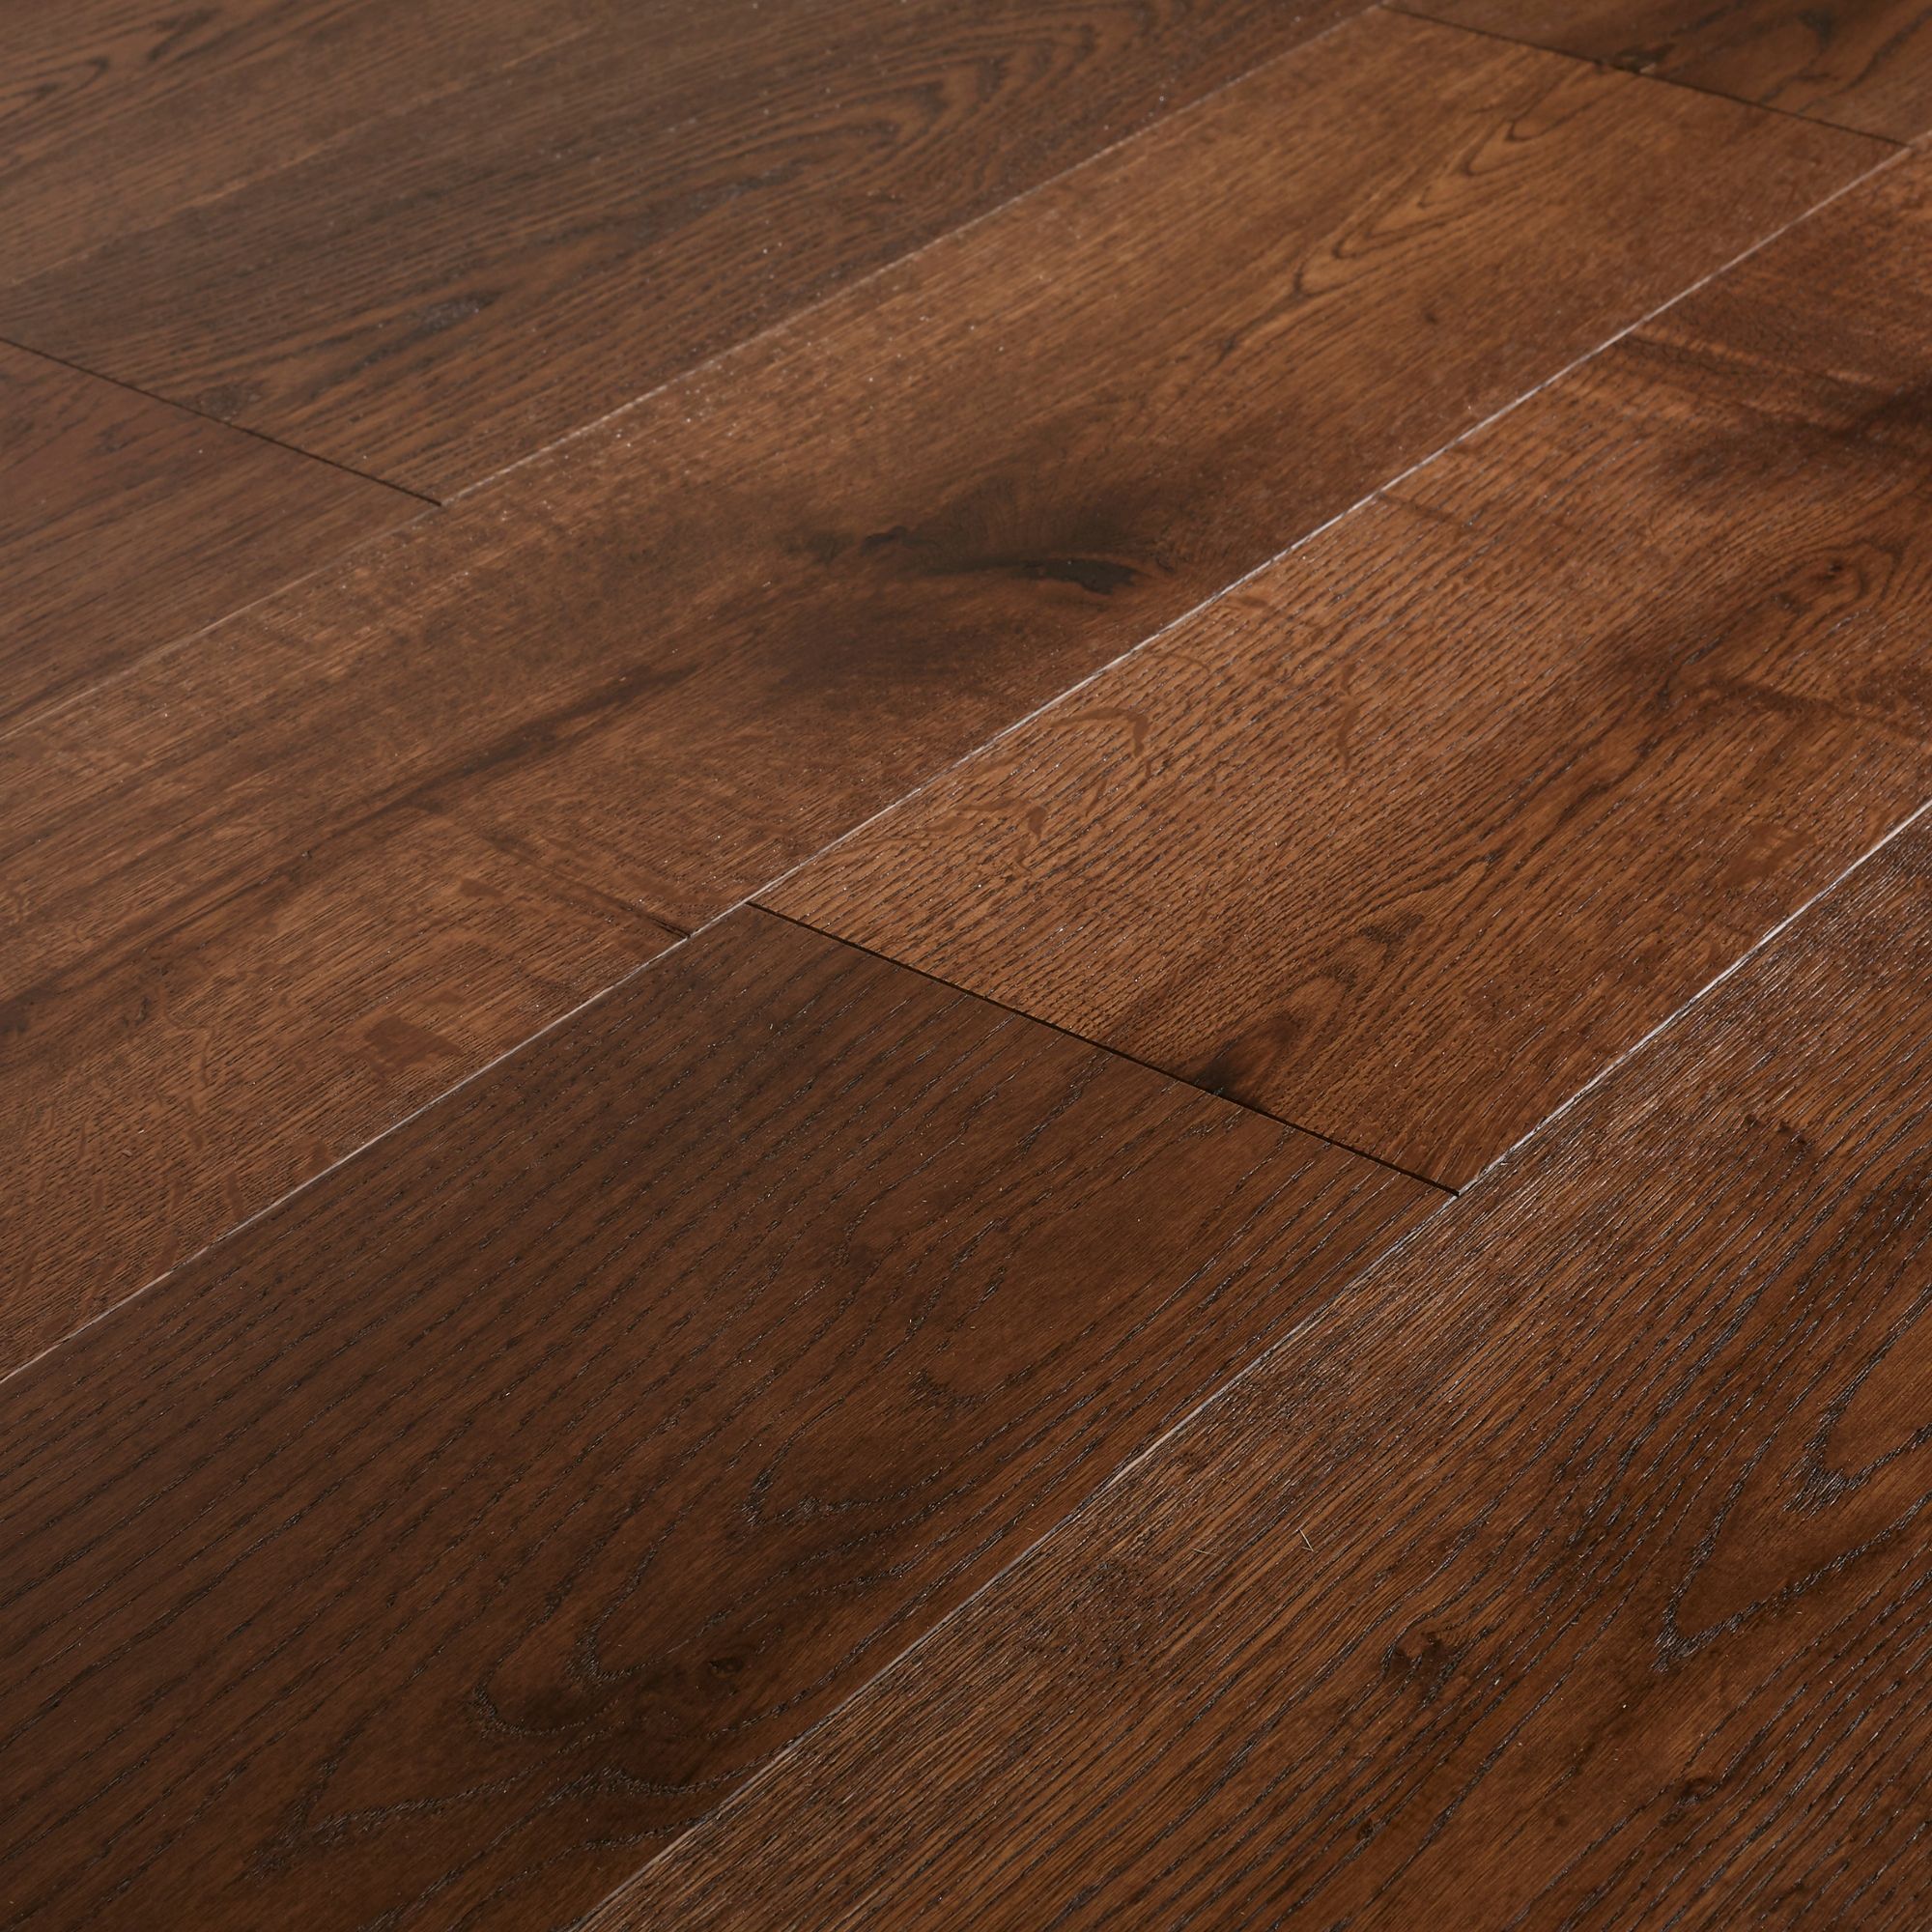 GoodHome Kailas Natural Oak Real Wood Top Layer Flooring, 2.05M² Set